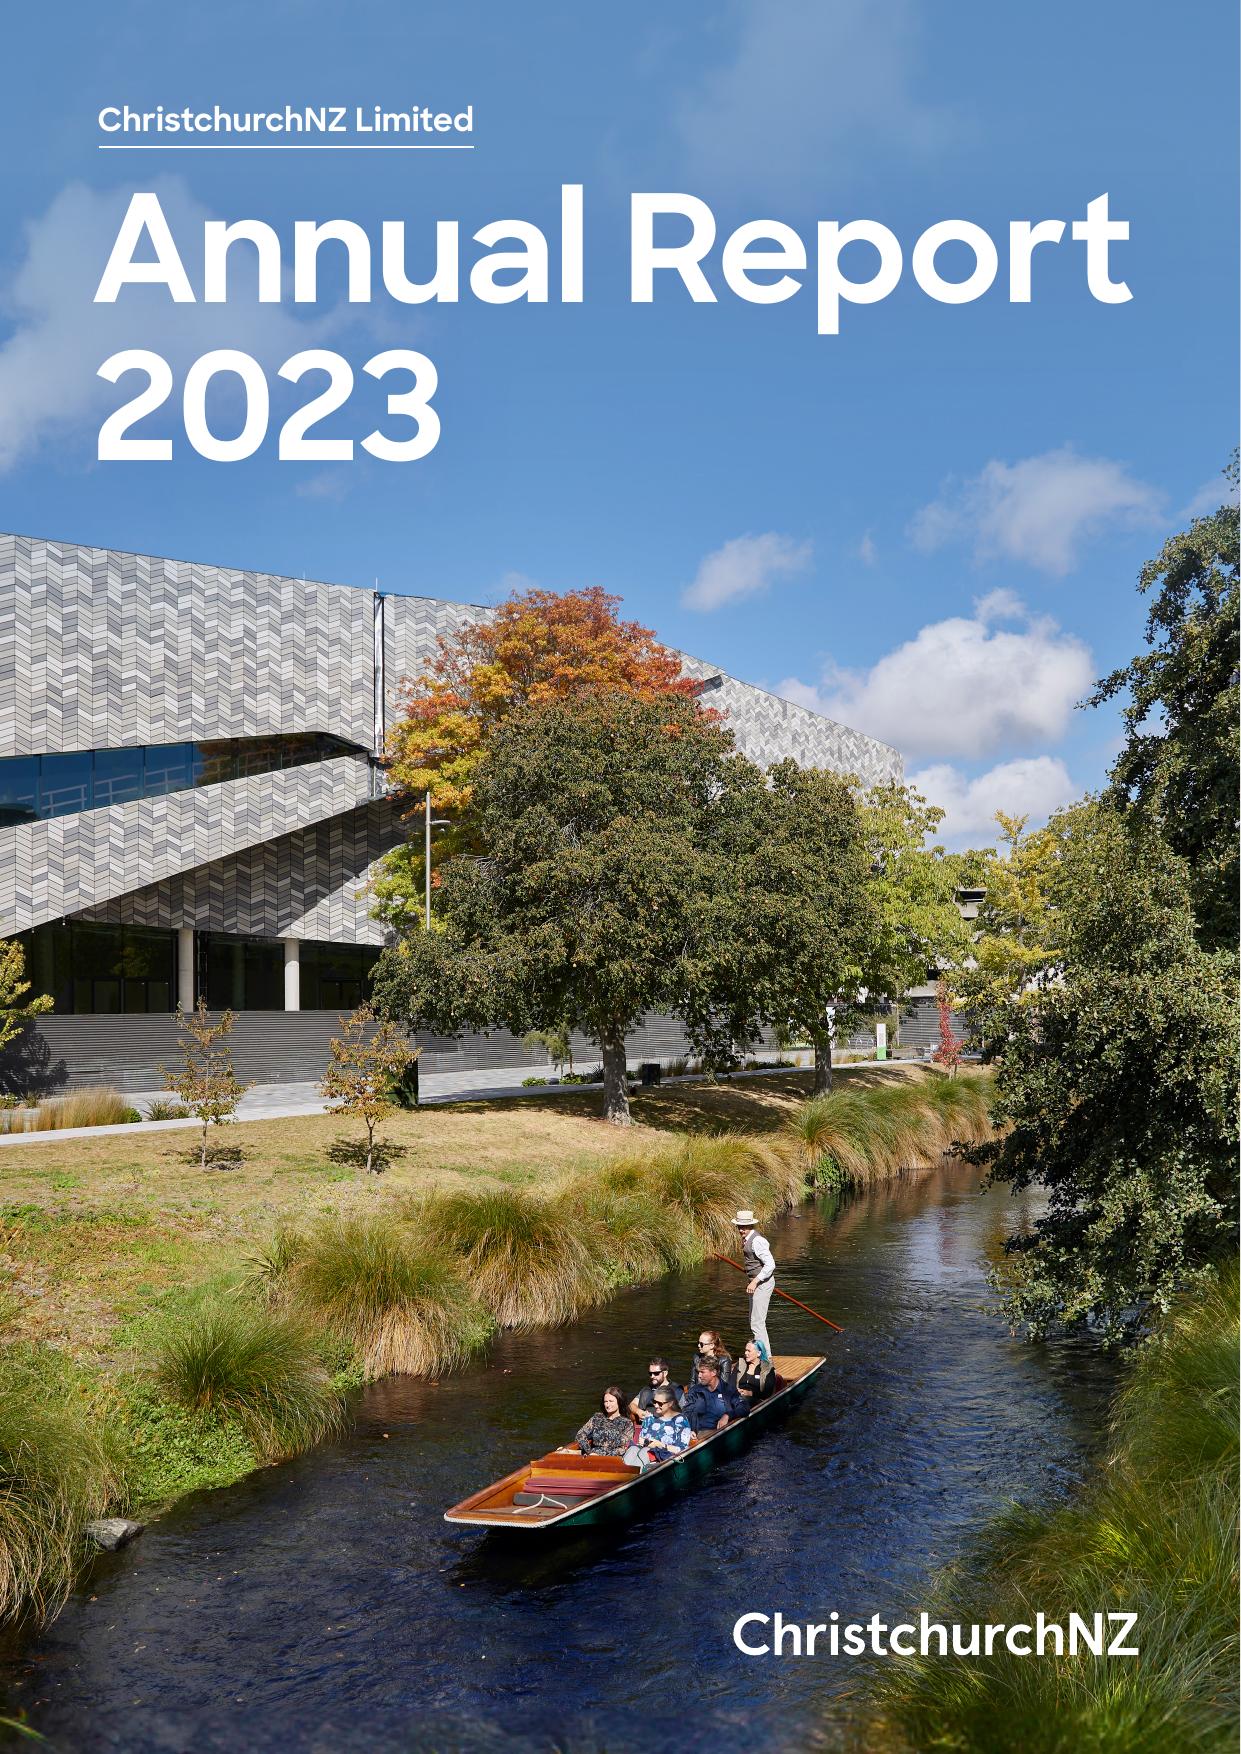 OMEGARENTALCARS 2023 Annual Report